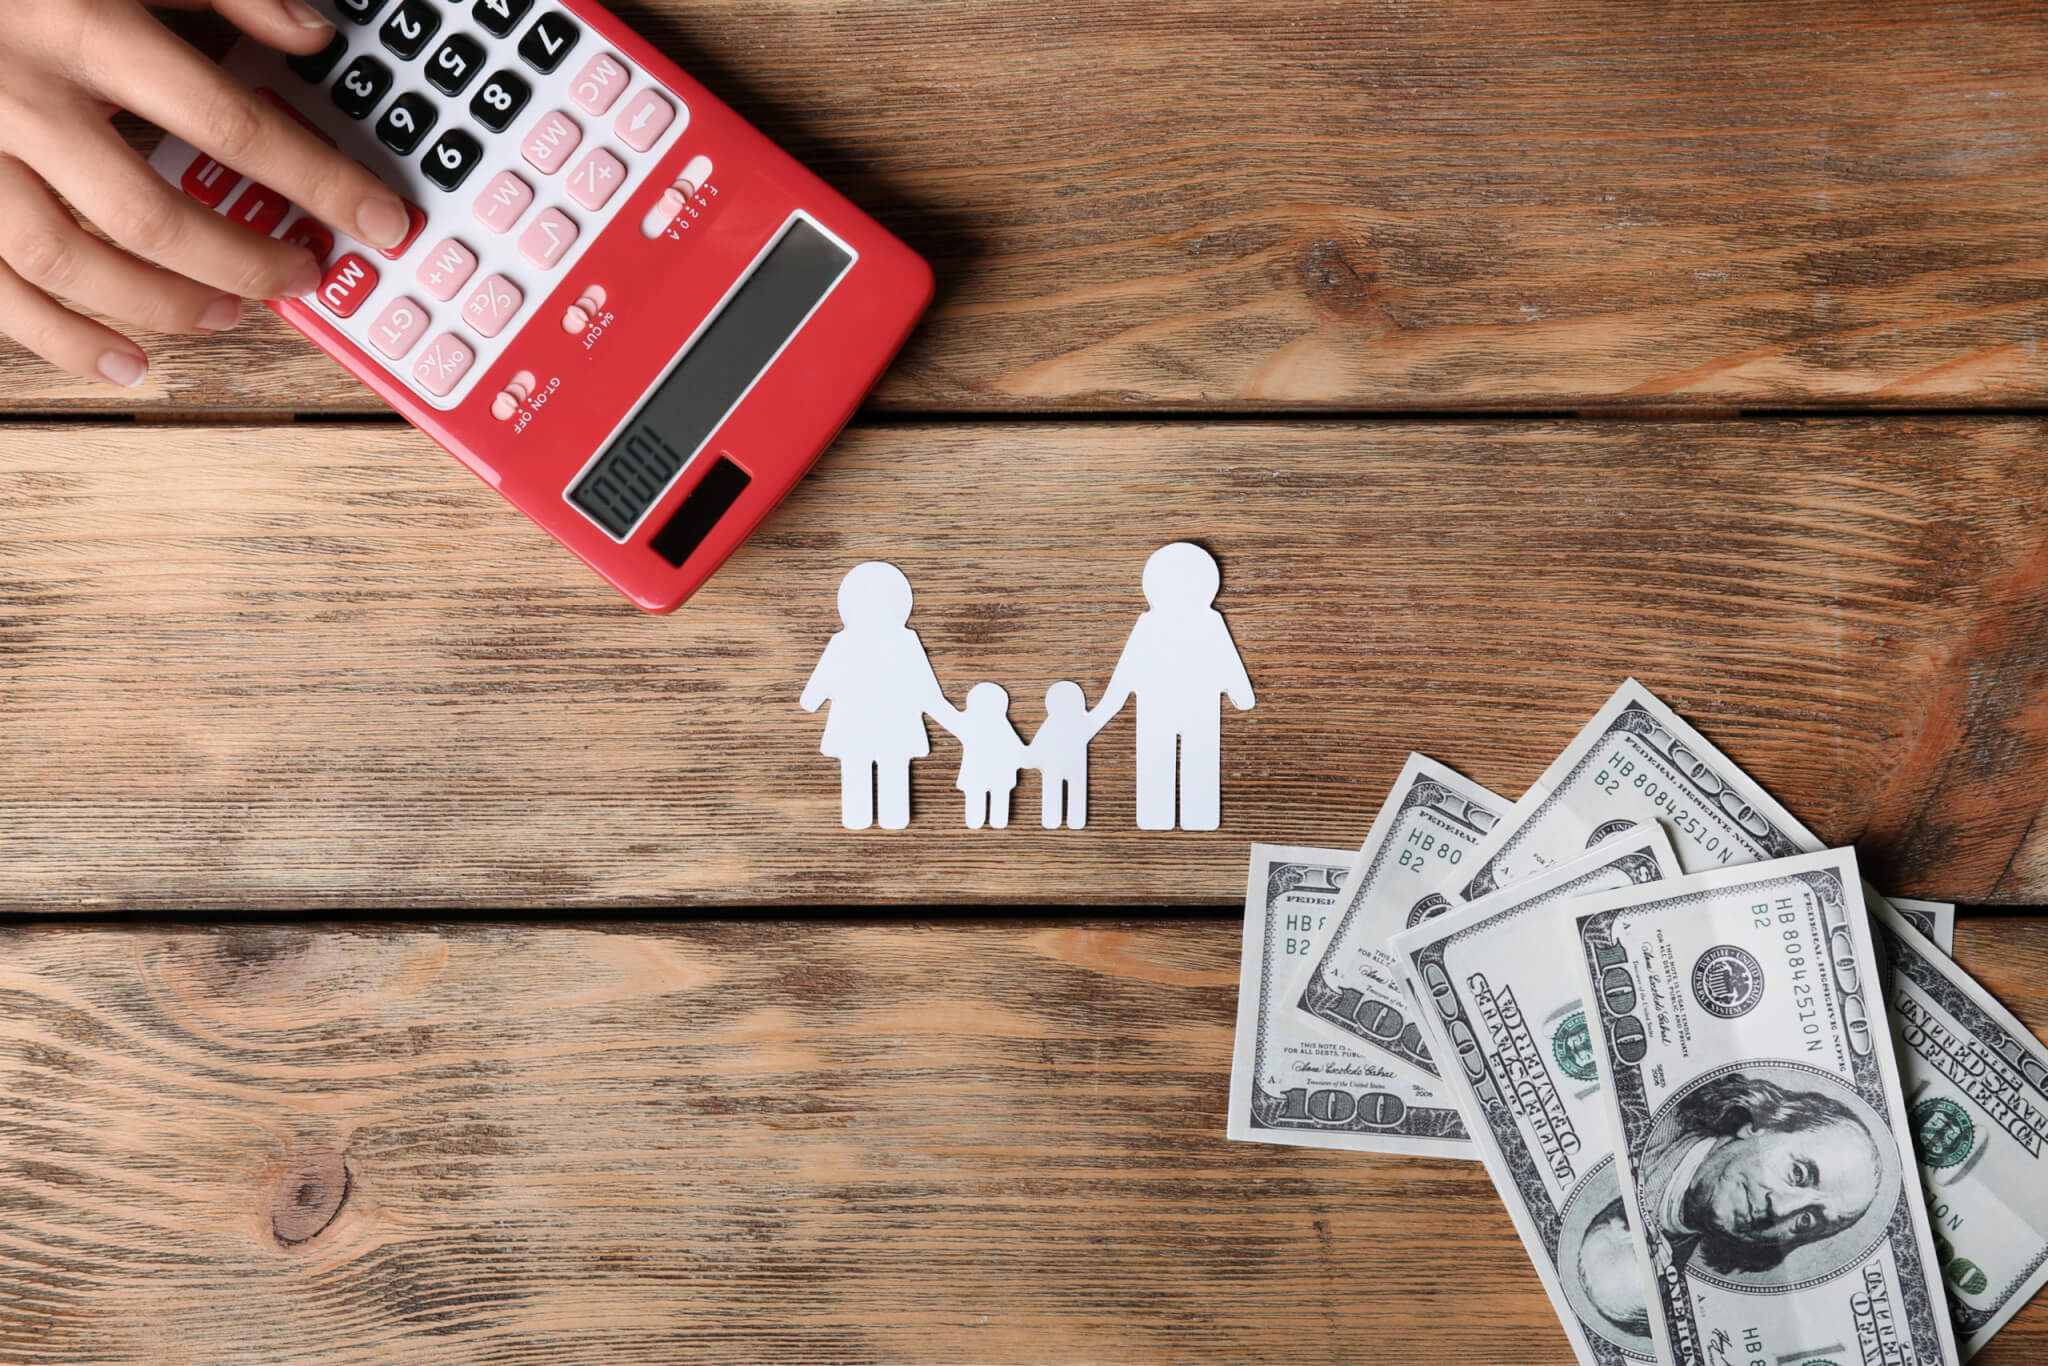 Family income, savings, money